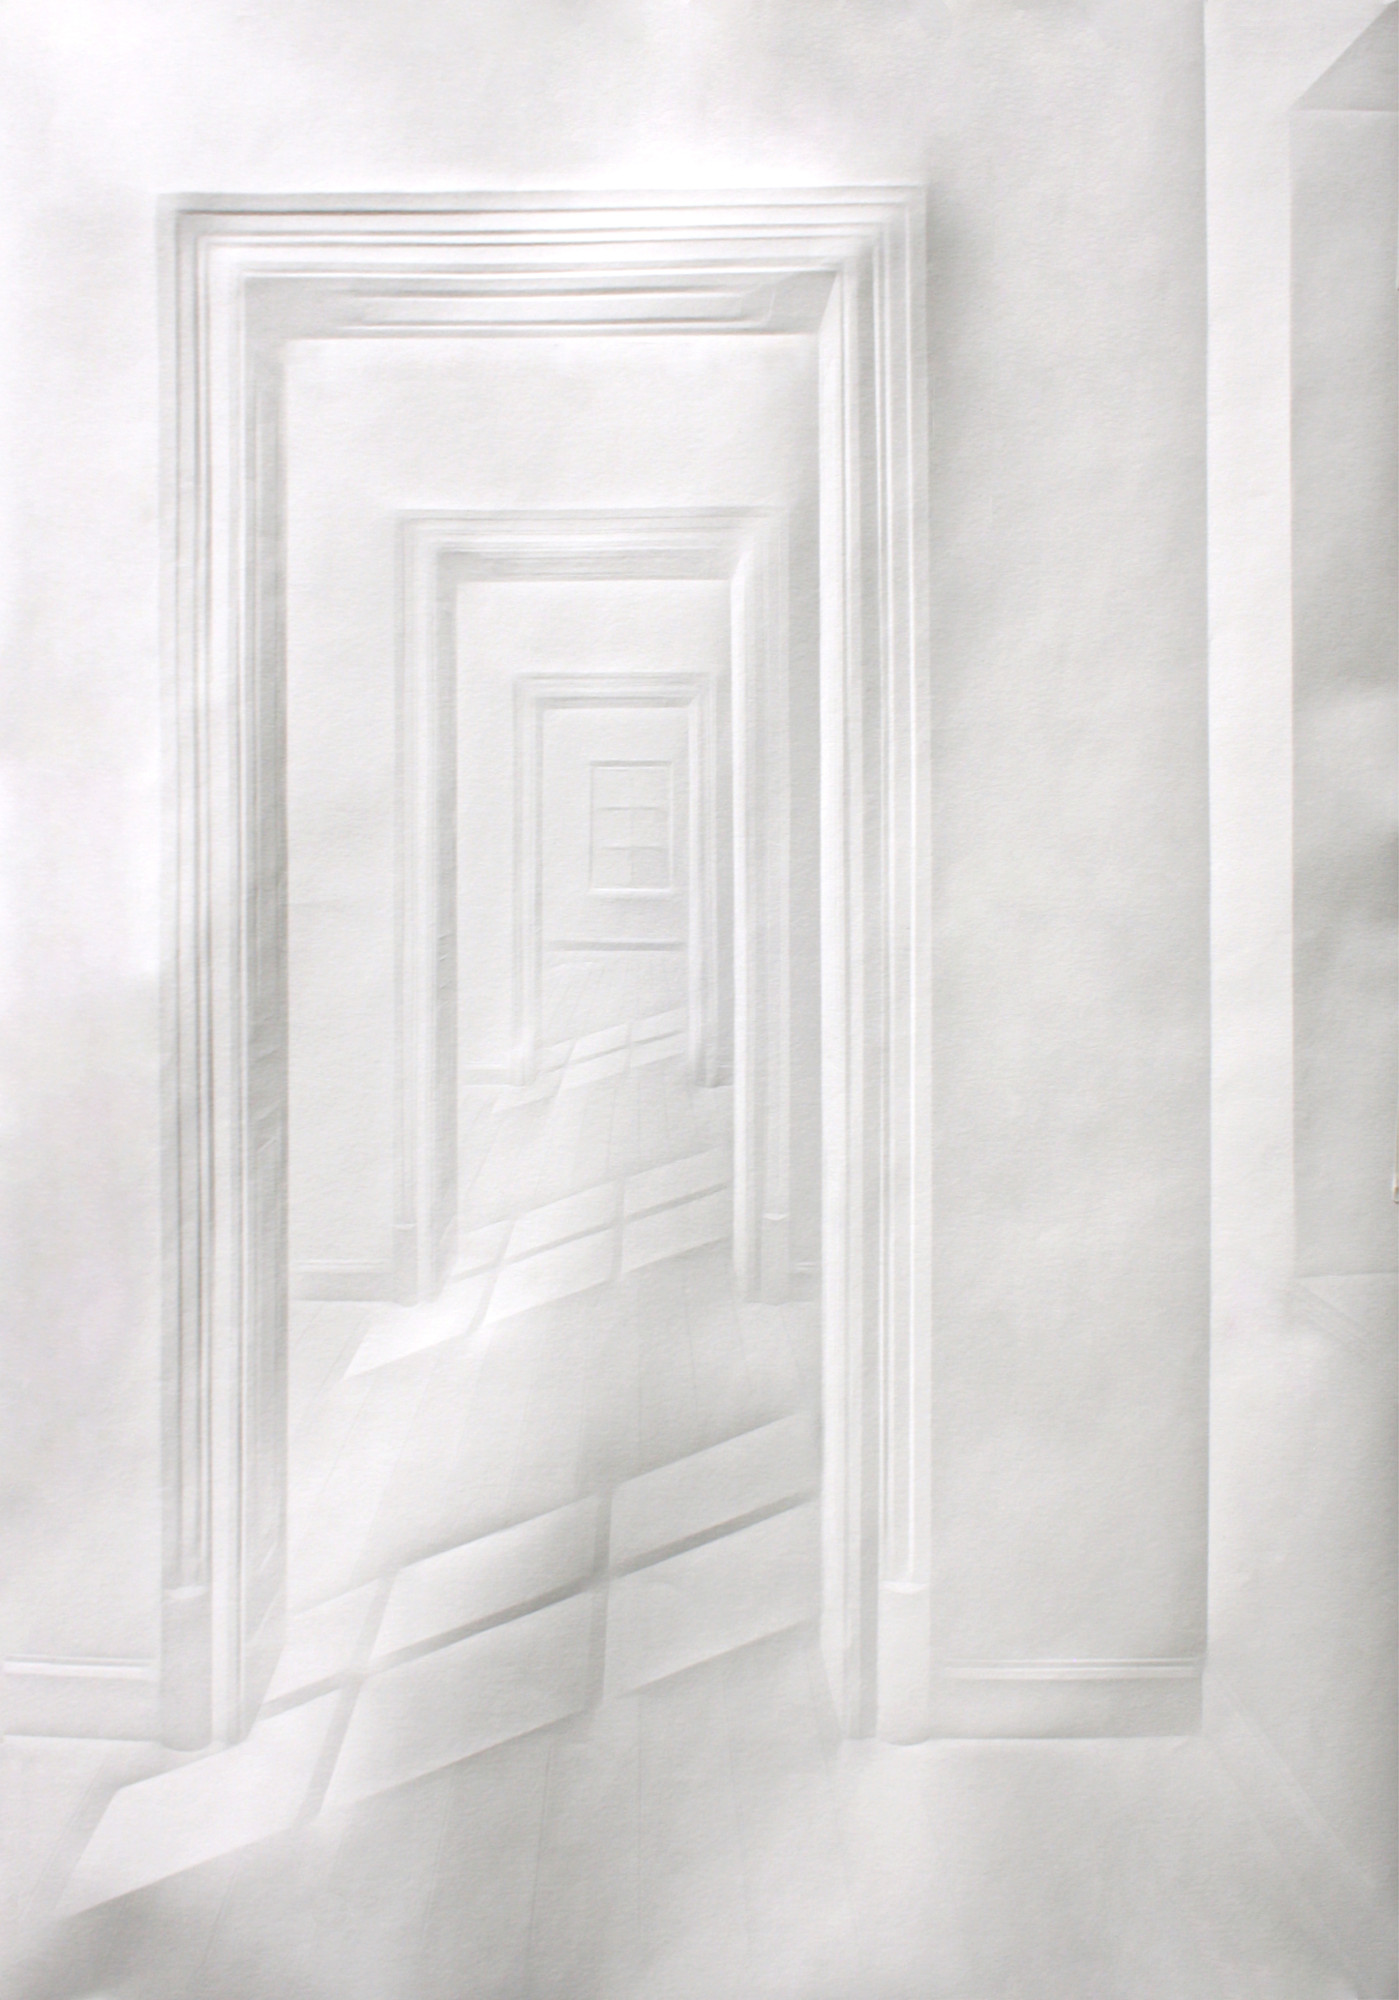 Simon Schubert – Untitled (light in rooms), 2019 70 x 50 cm folded paper